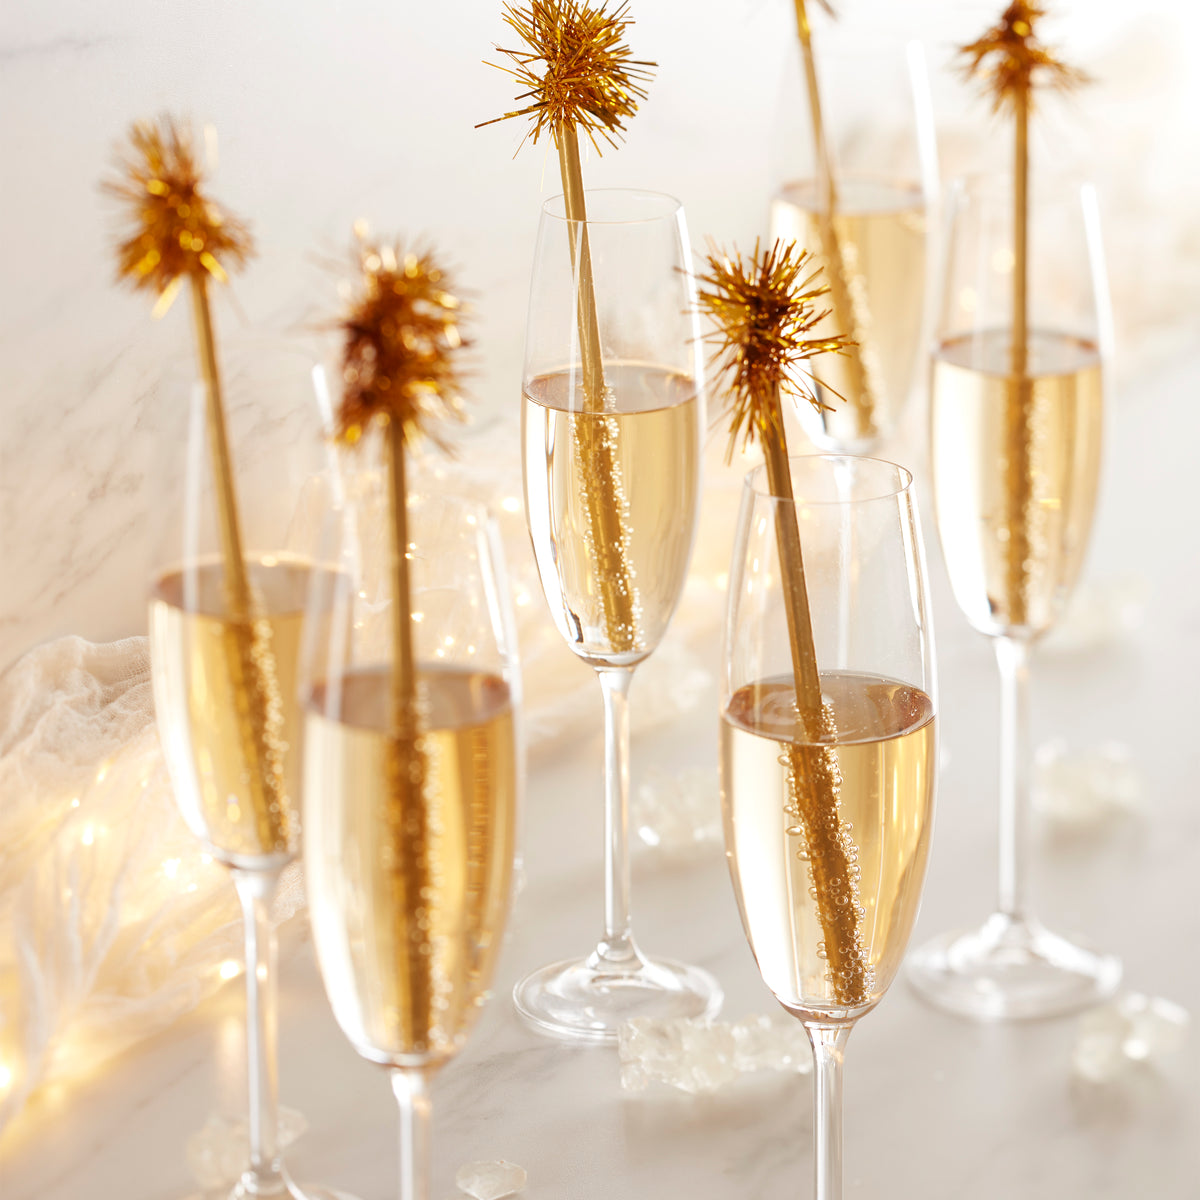 Wine Glasses & Champagne Flutes